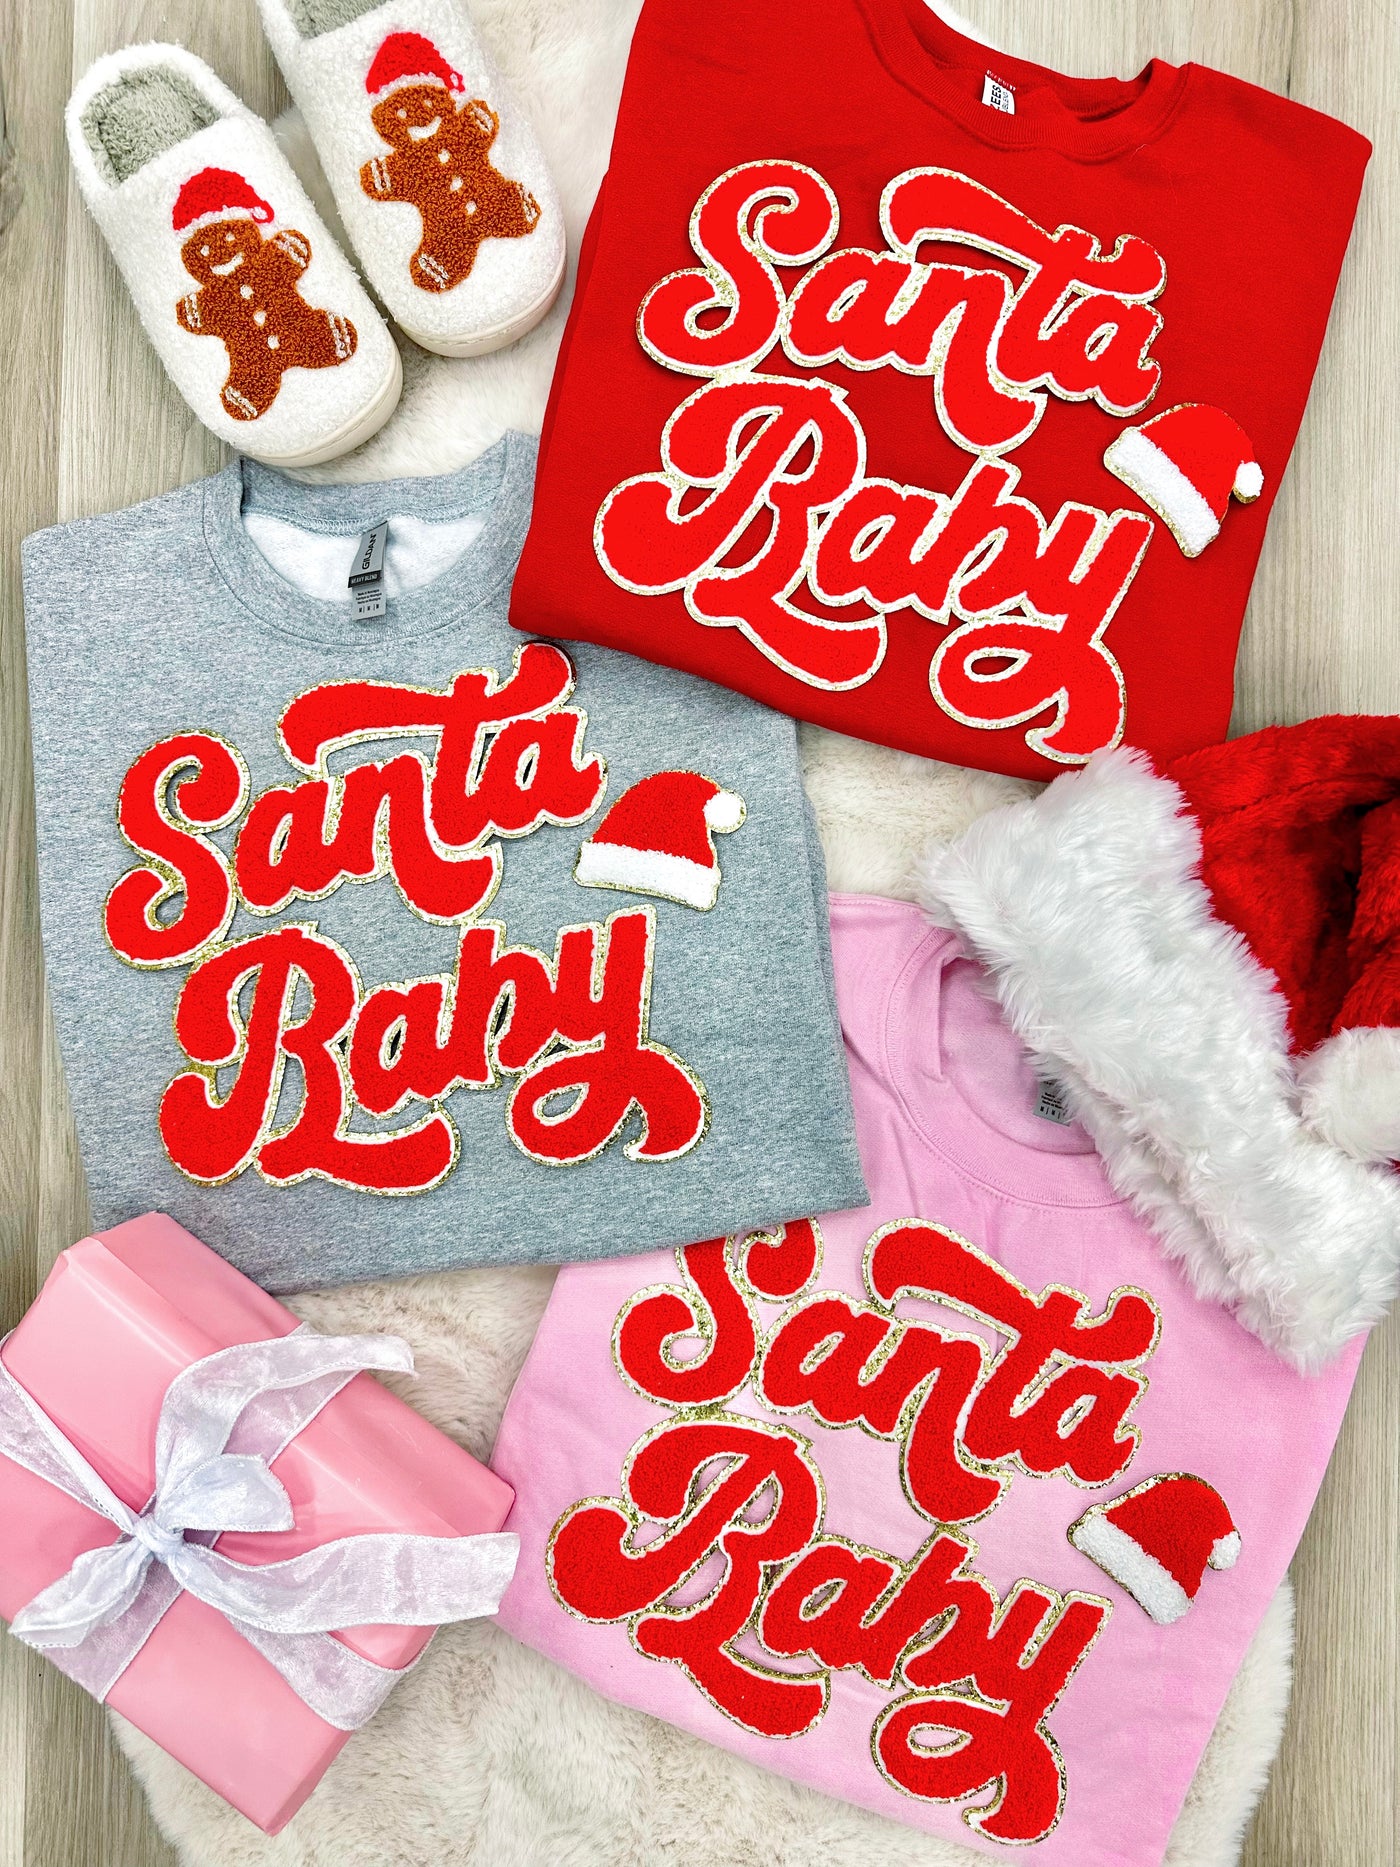 Santa Baby Letter Patch Crewneck Sweatshirt